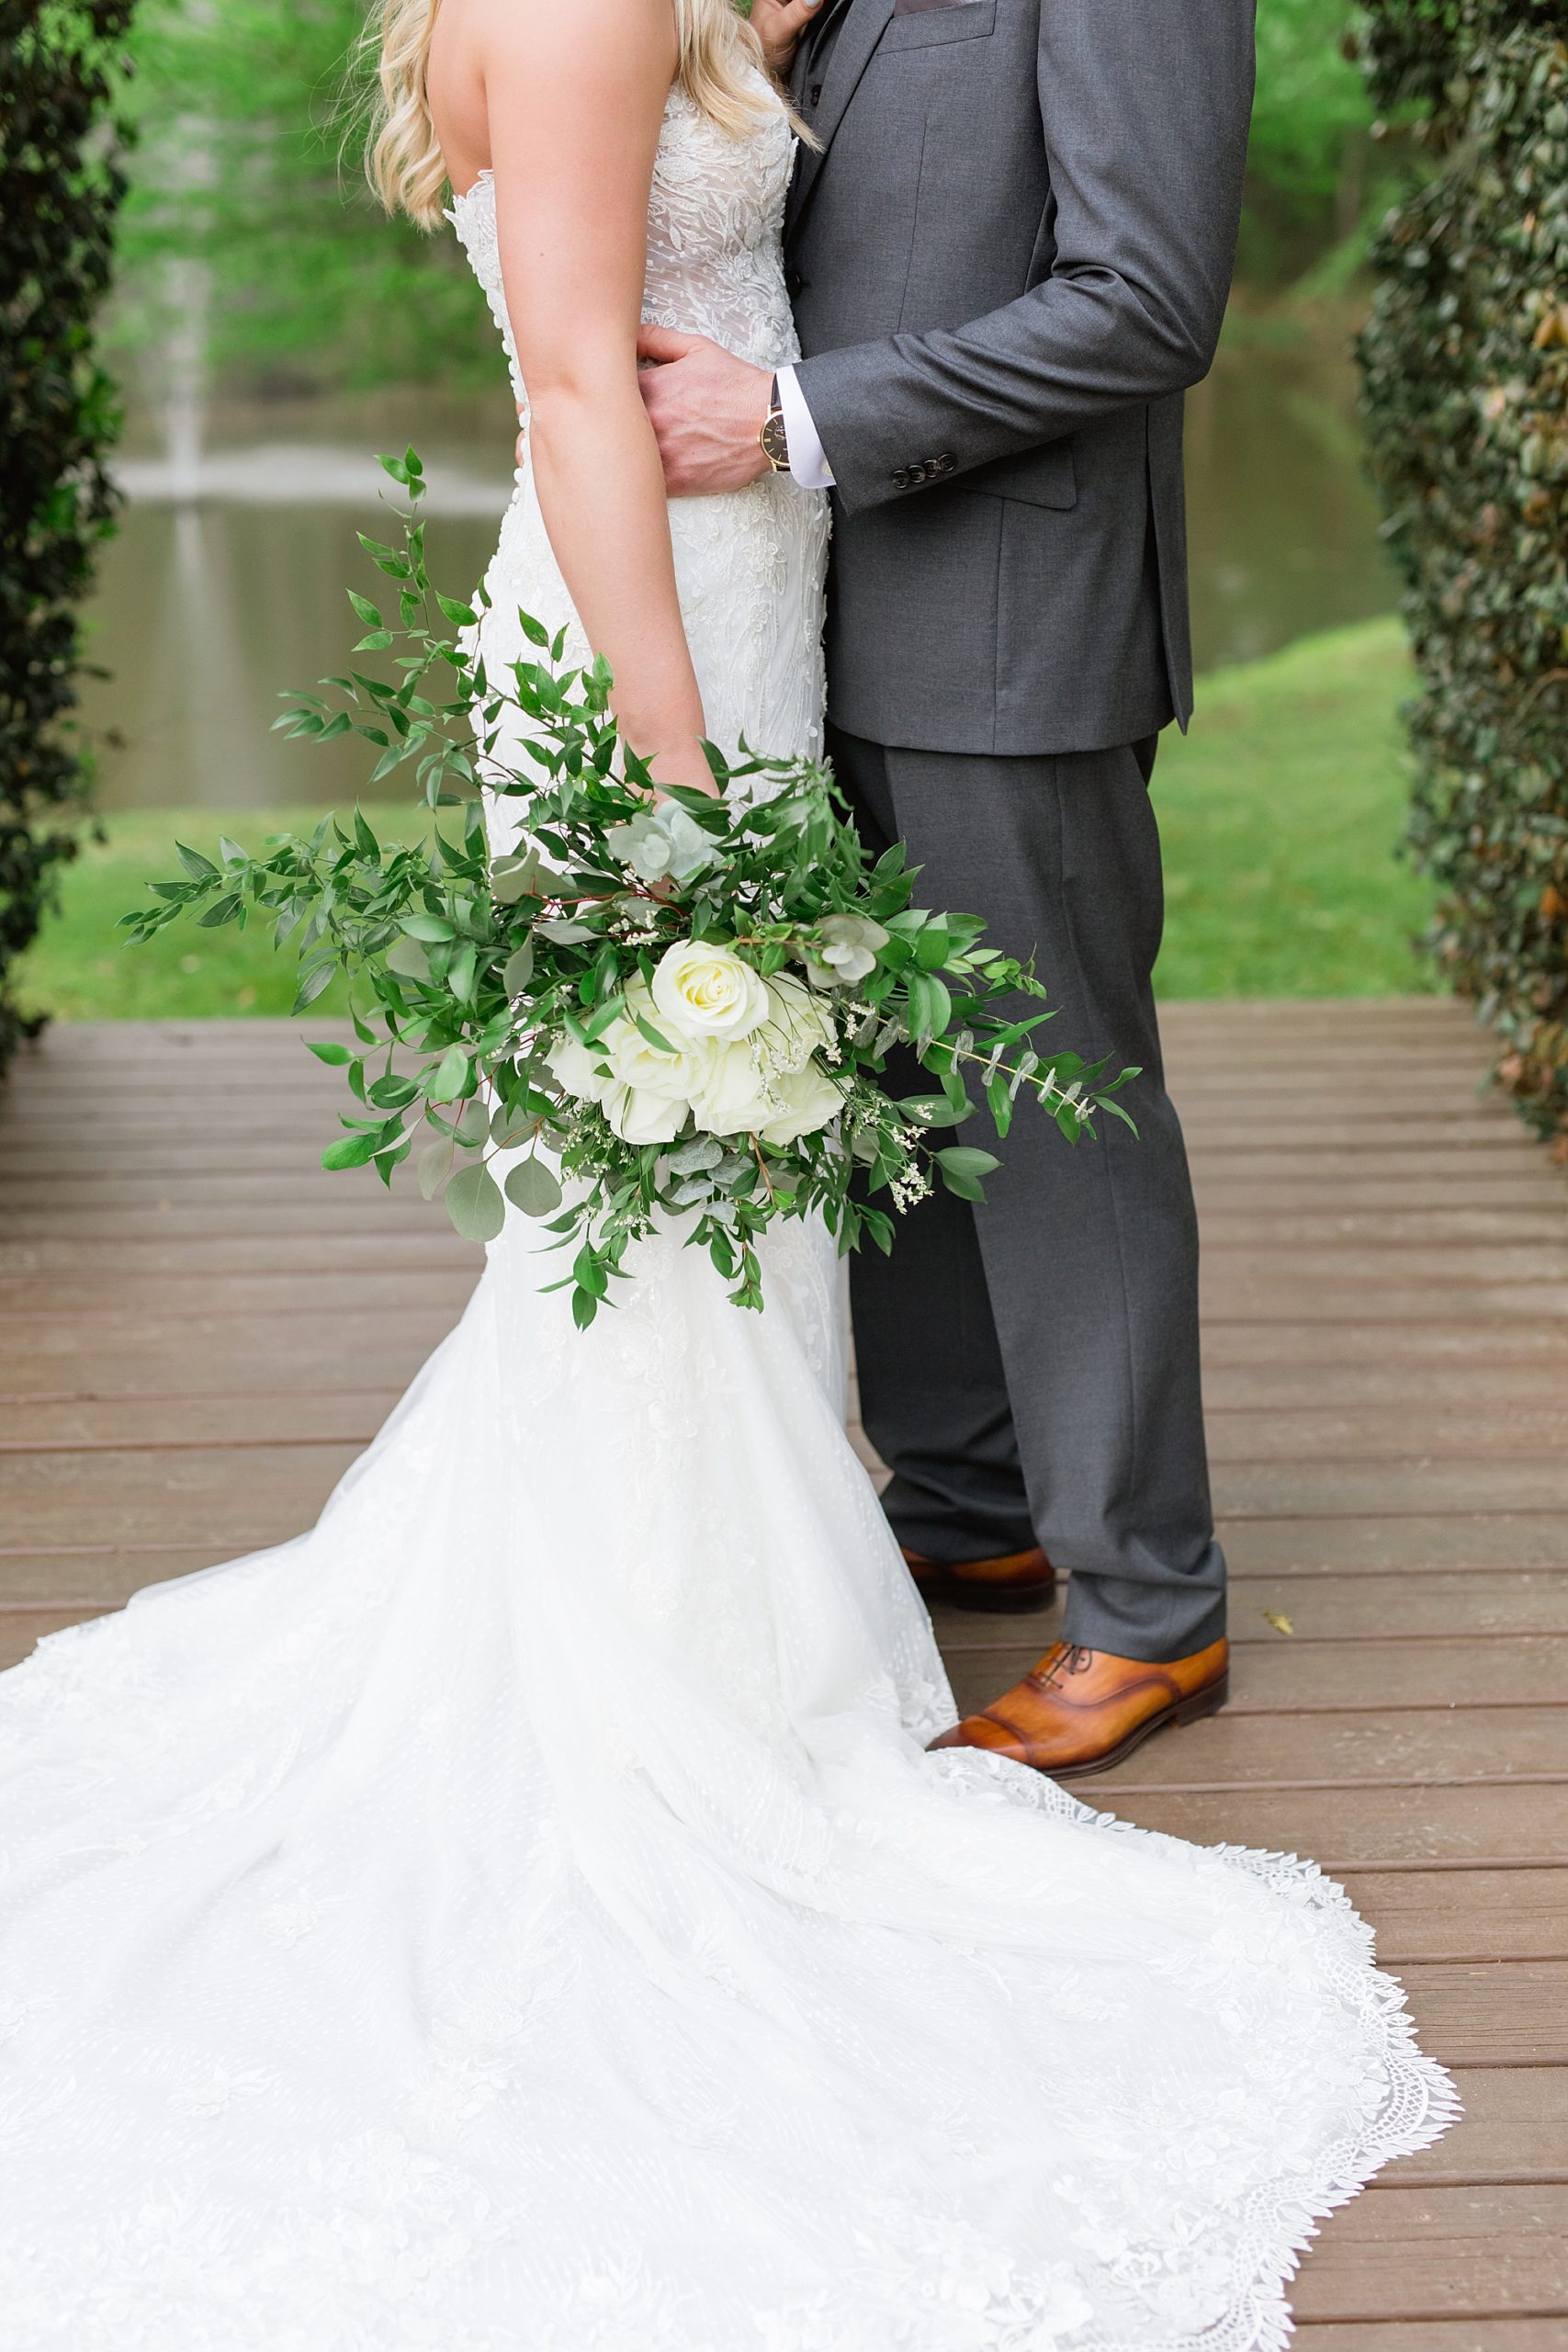 A classic spring Texas destination wedding Breanne Rochelle Photography.